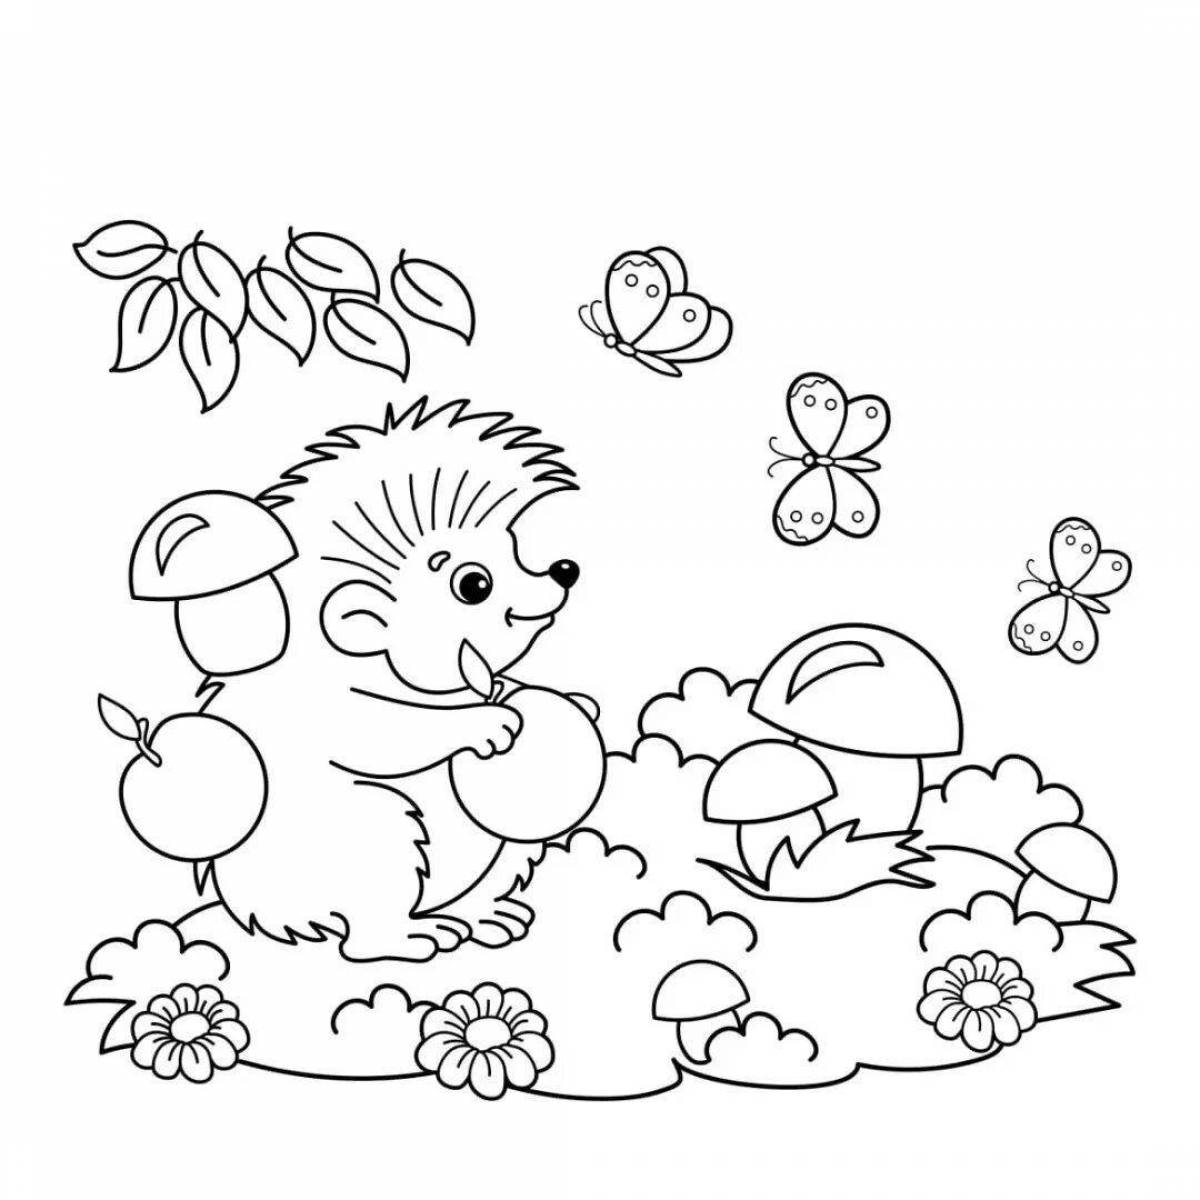 Great hedgehog coloring book for kids